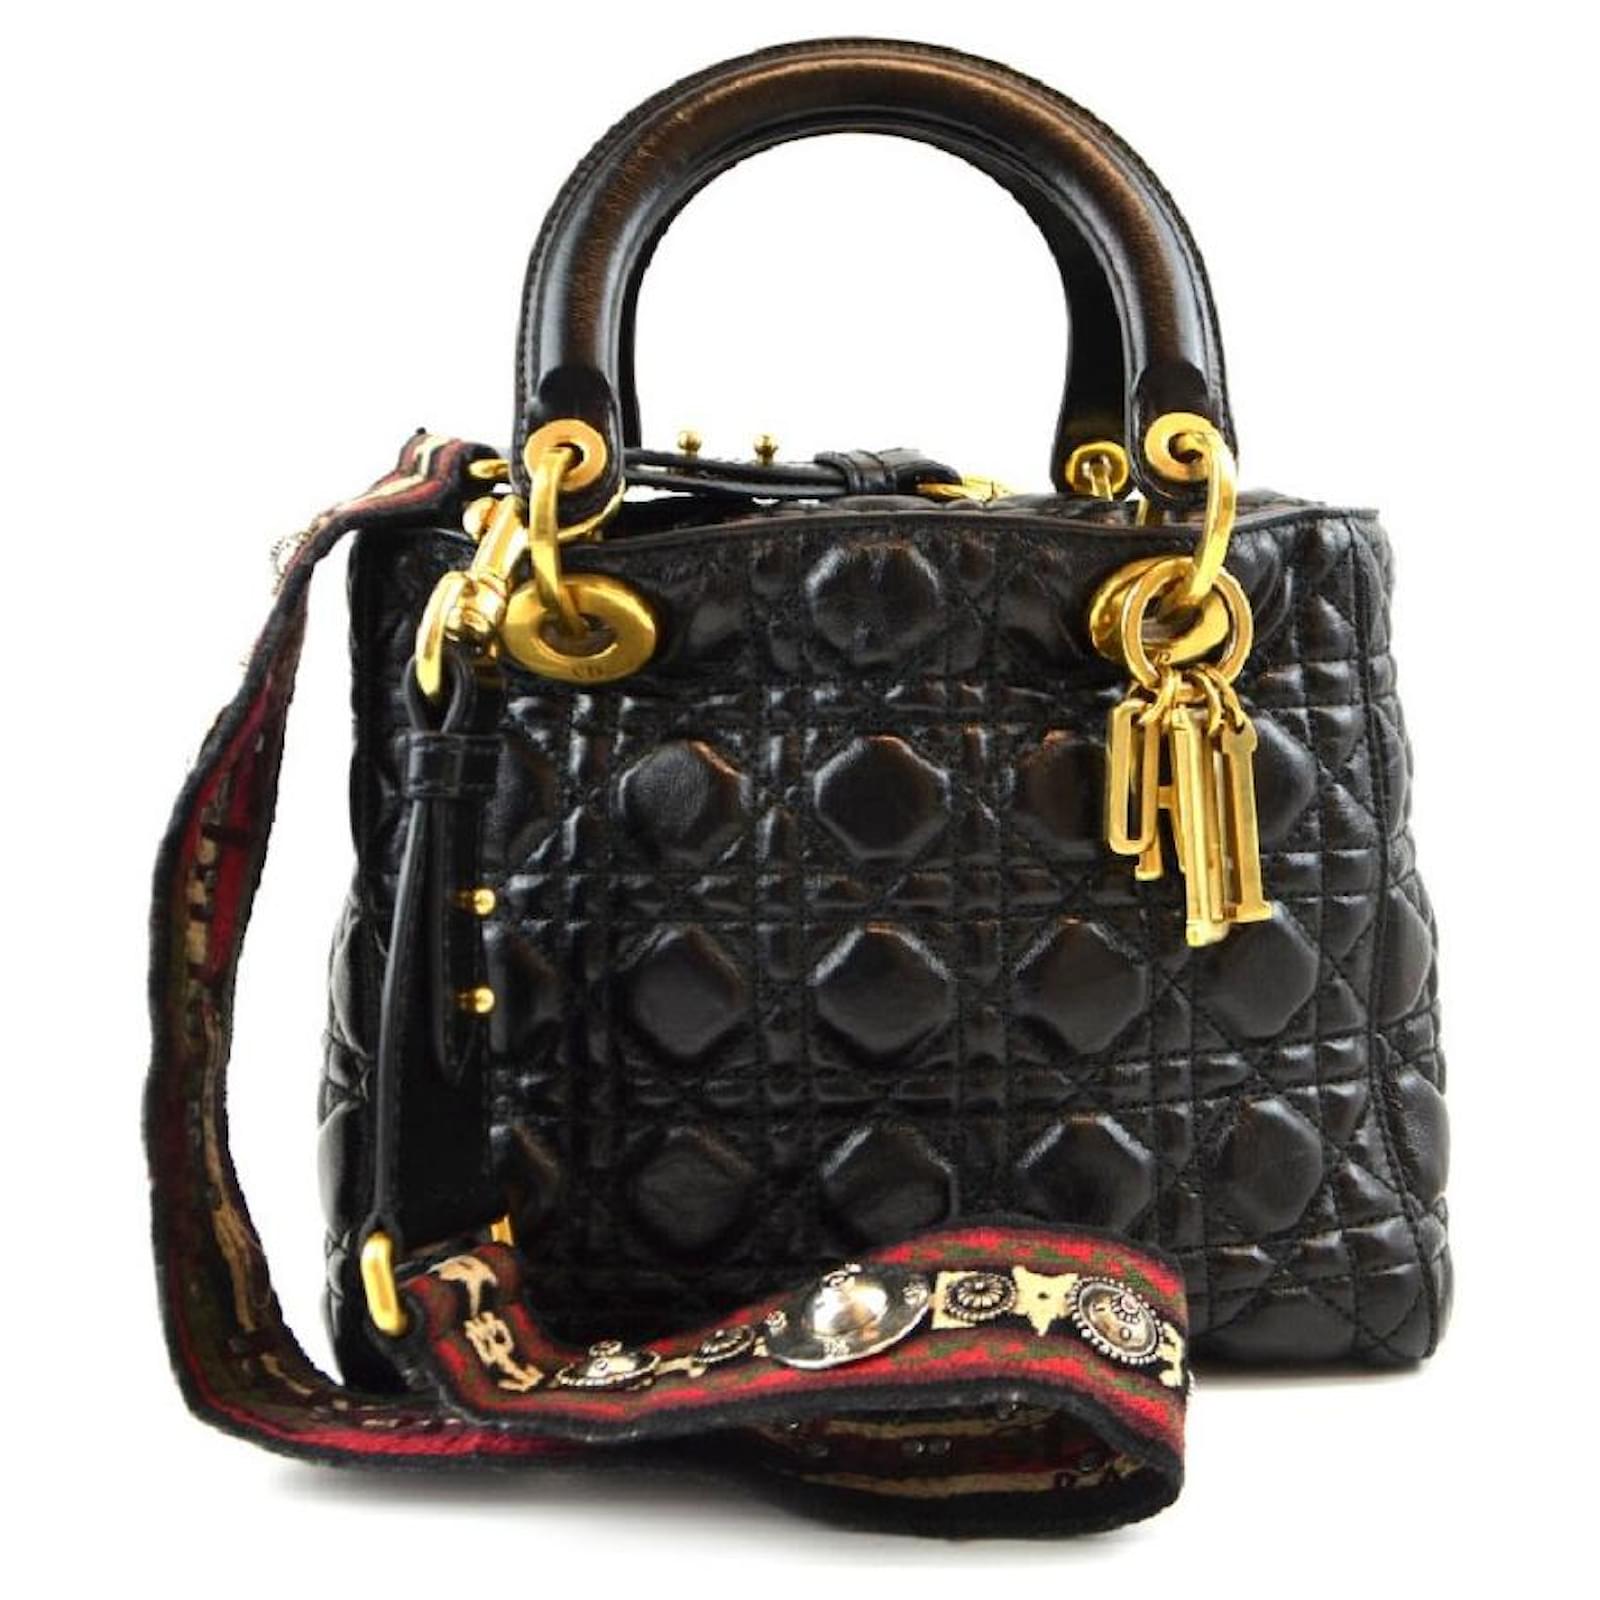 Lady dior leather handbag Dior Black in Leather - 26066241